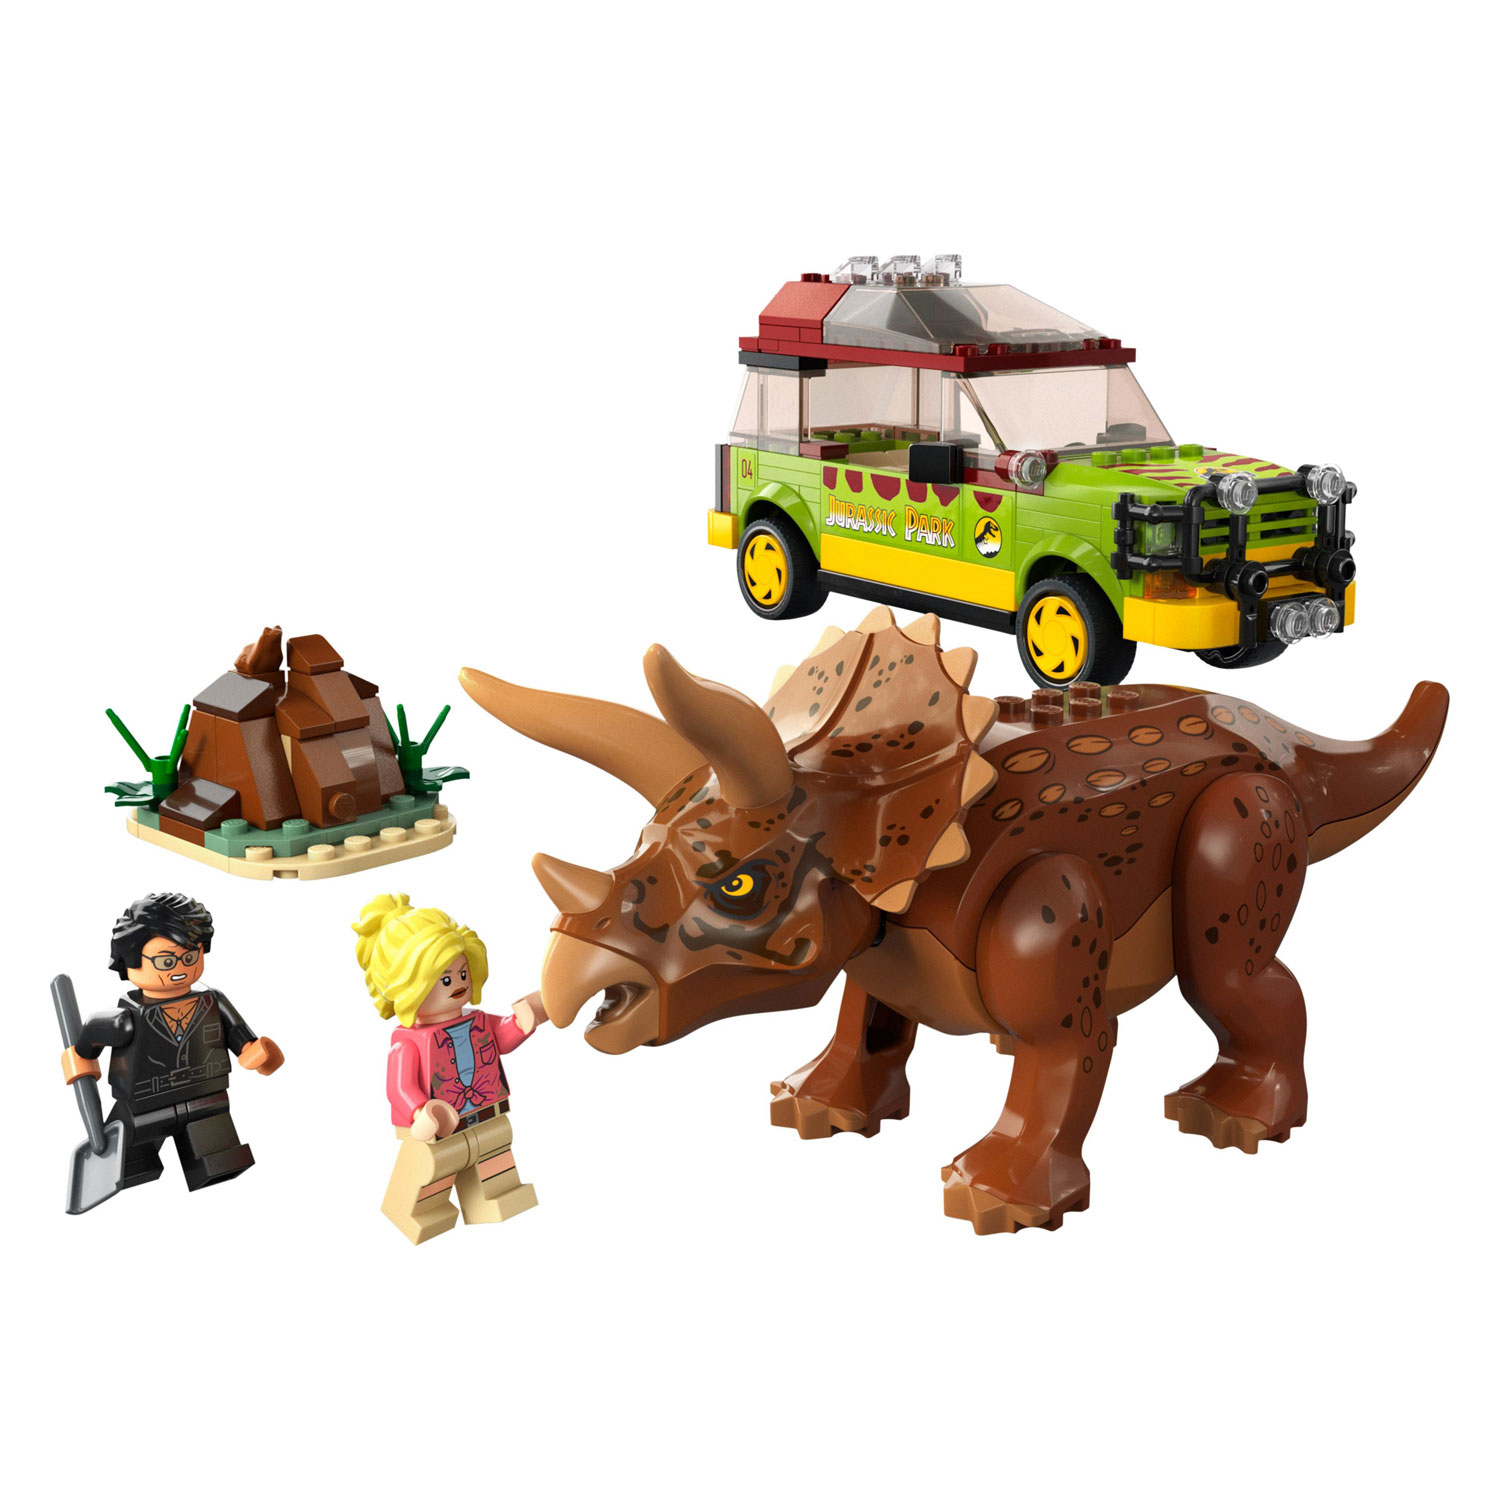 76959 LEGO Jurassic Park L'exploration du tricératops